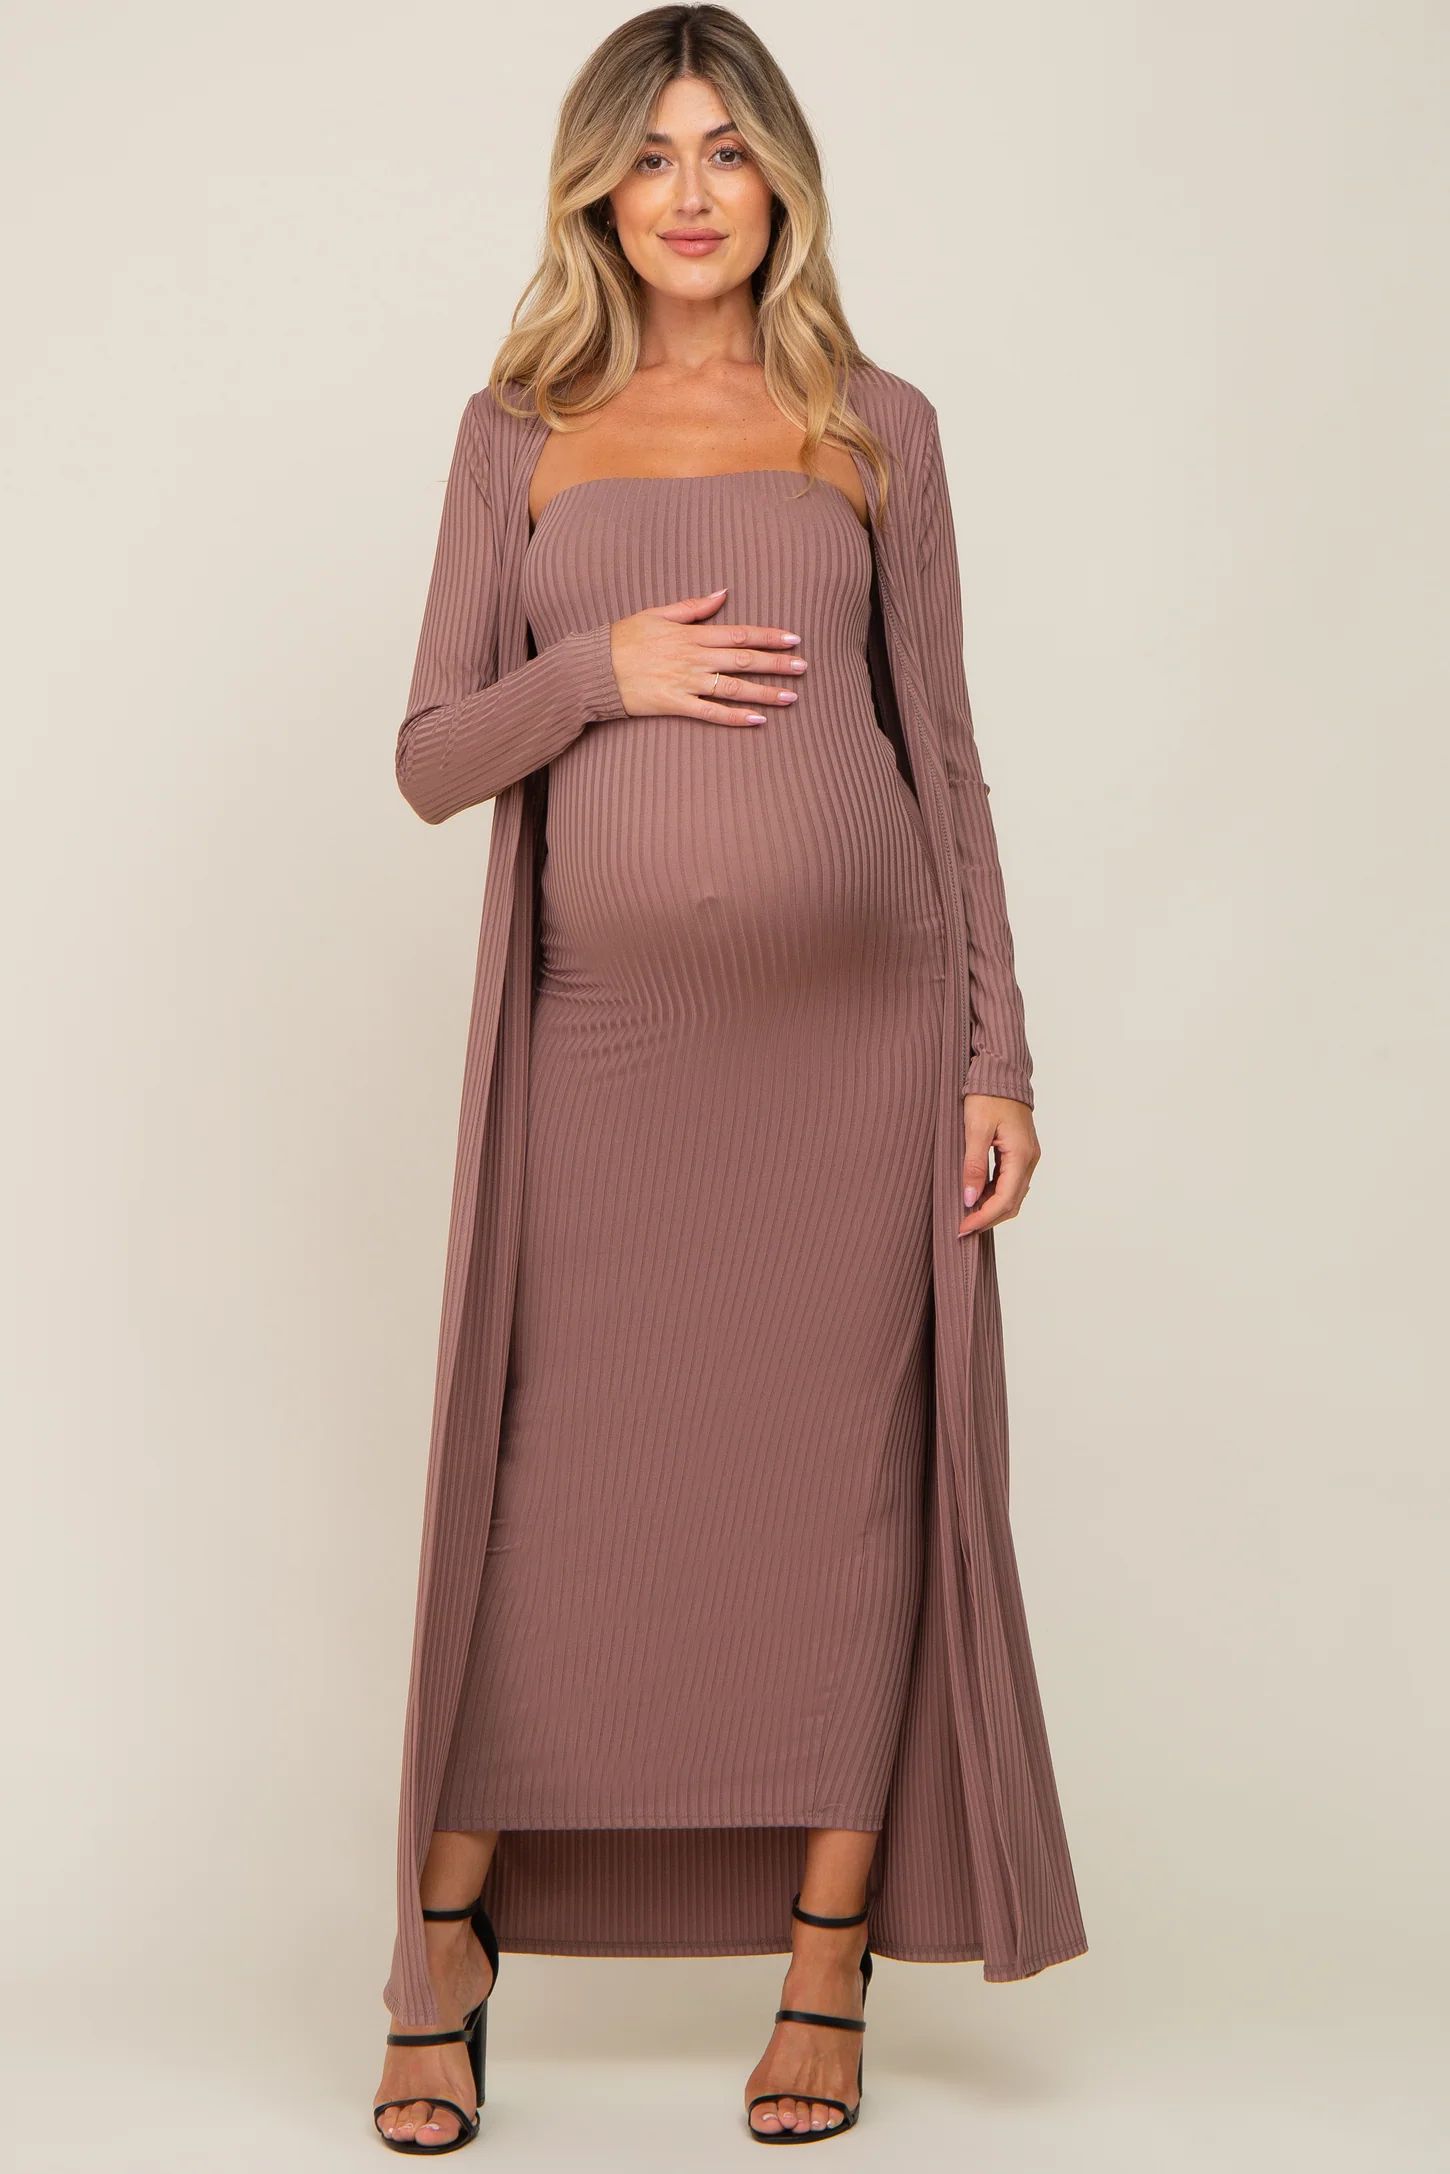 Mocha Ribbed Sleeveless Dress Cardigan Maternity Set | PinkBlush Maternity